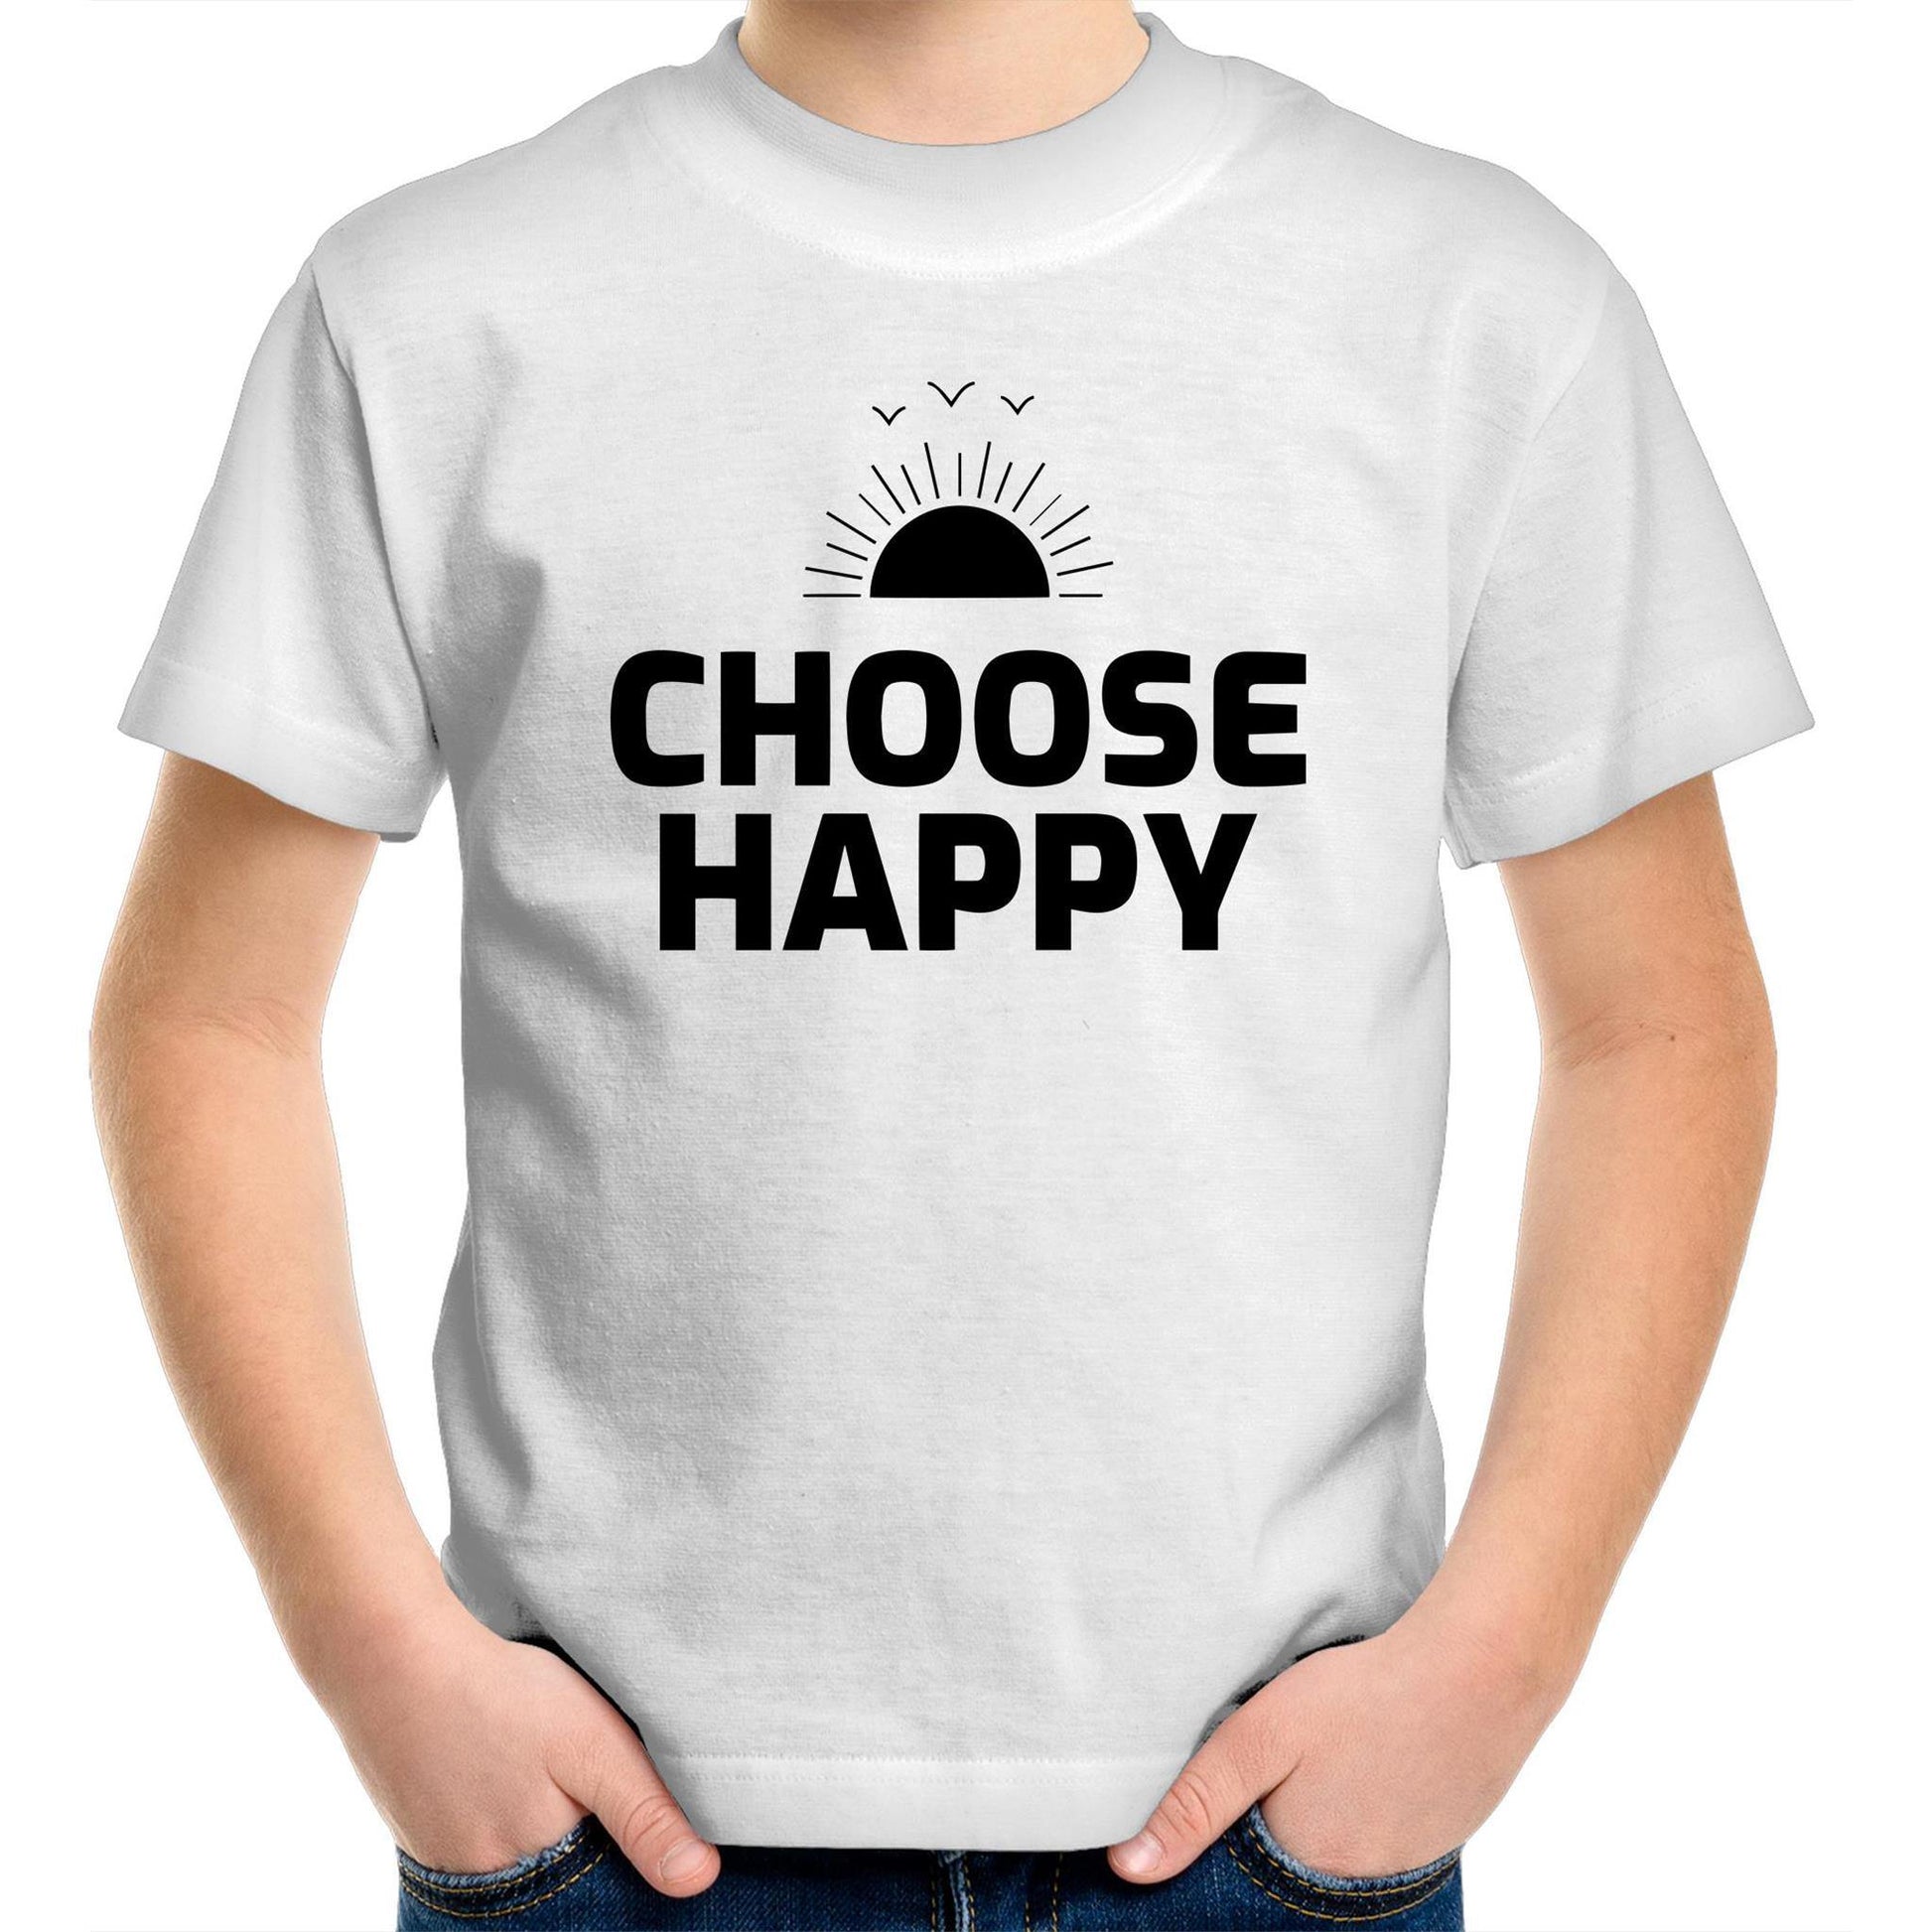 Choose Happy - Kids Youth Crew T-Shirt White Kids Youth T-shirt